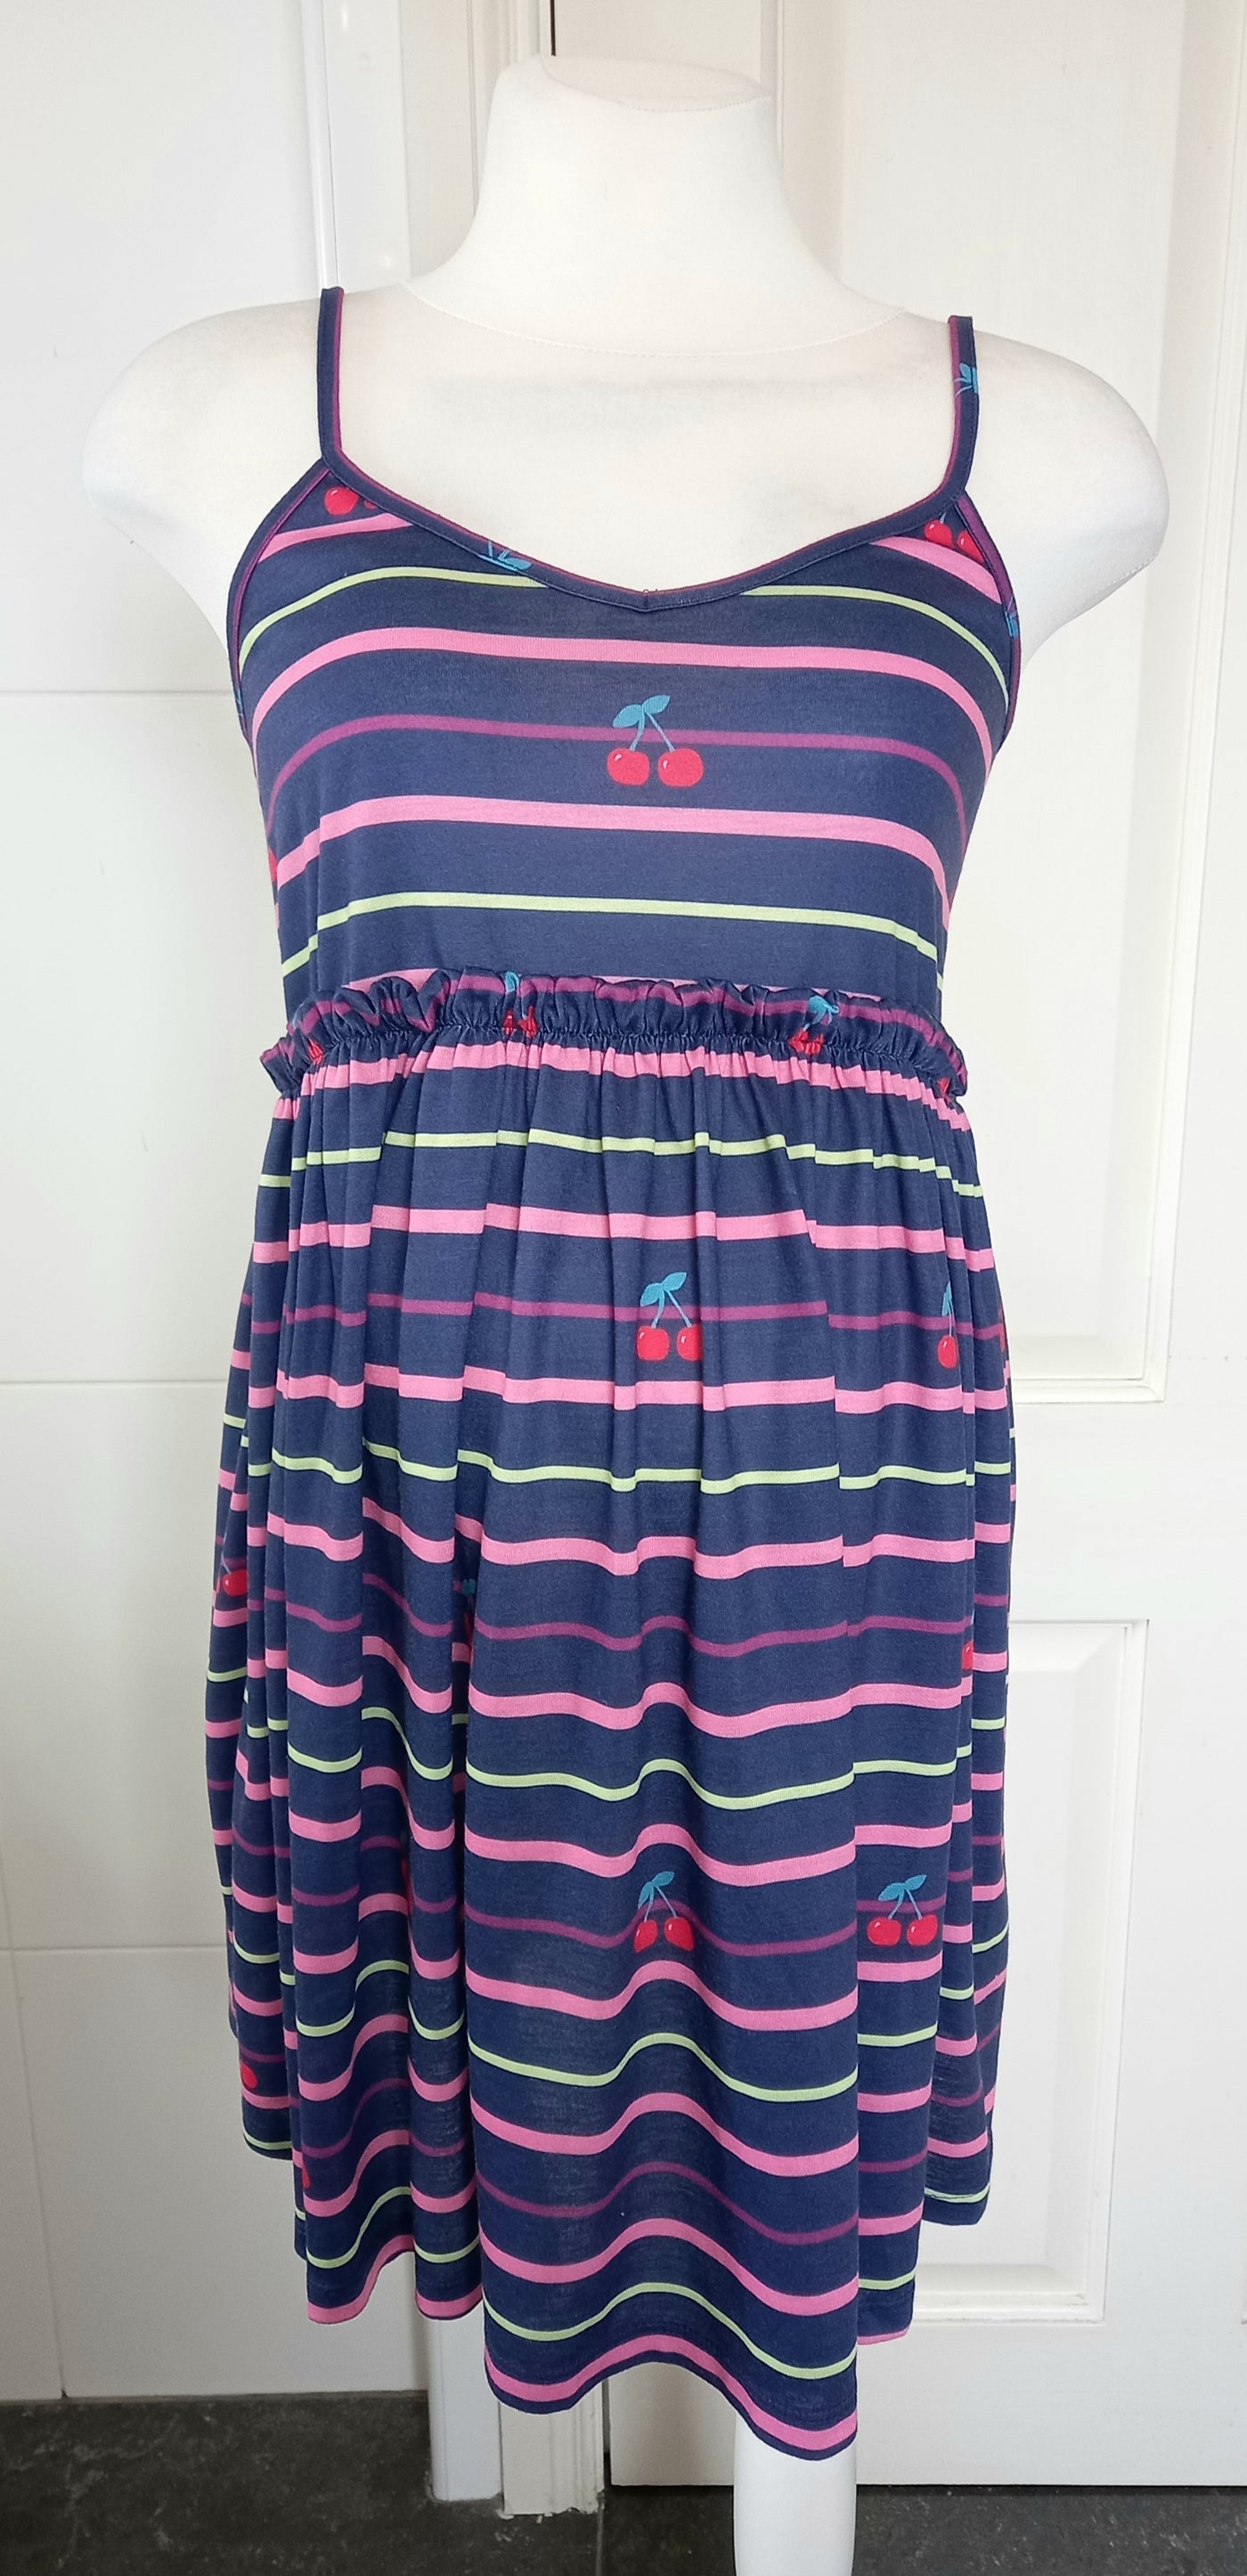 Asos Maternity Navy, Pink & Yellow Striped Cherry Print Dress - Size 8